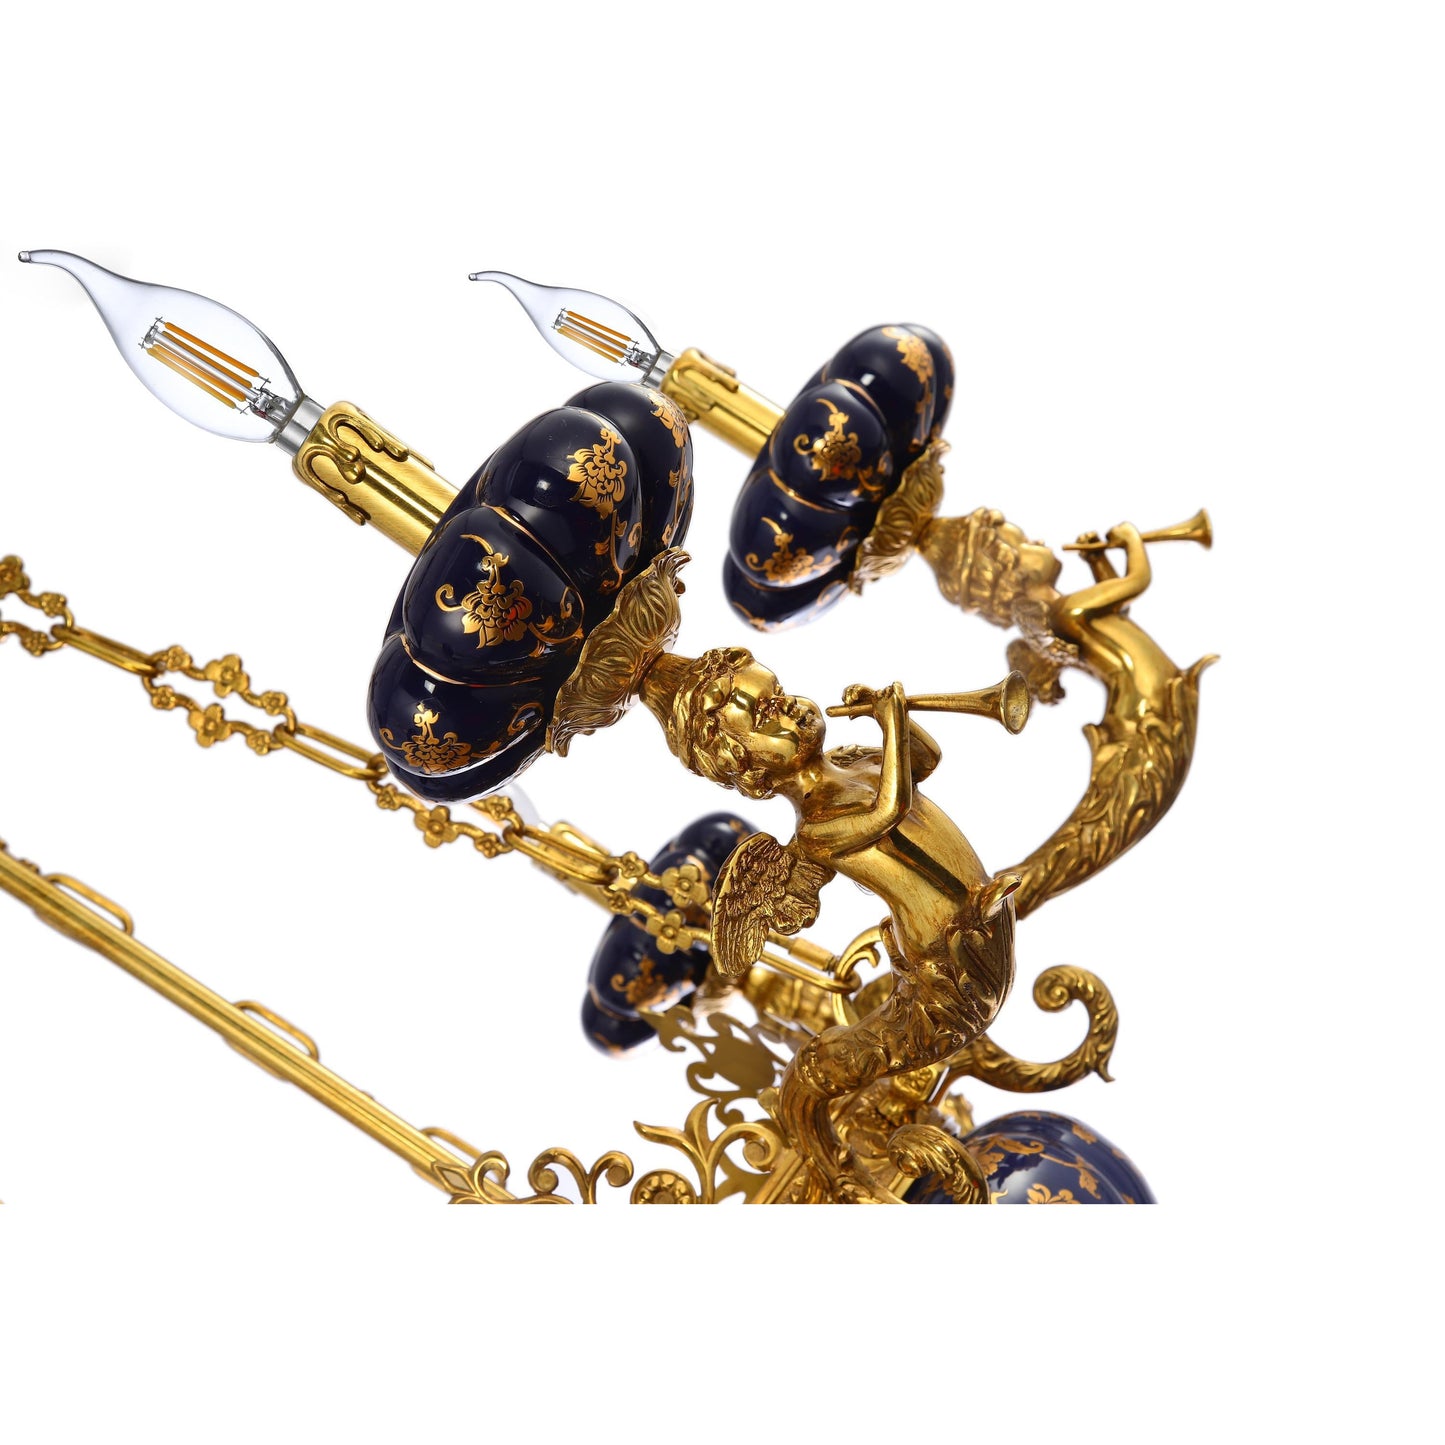 Araña de querubines estilo Luis XVI